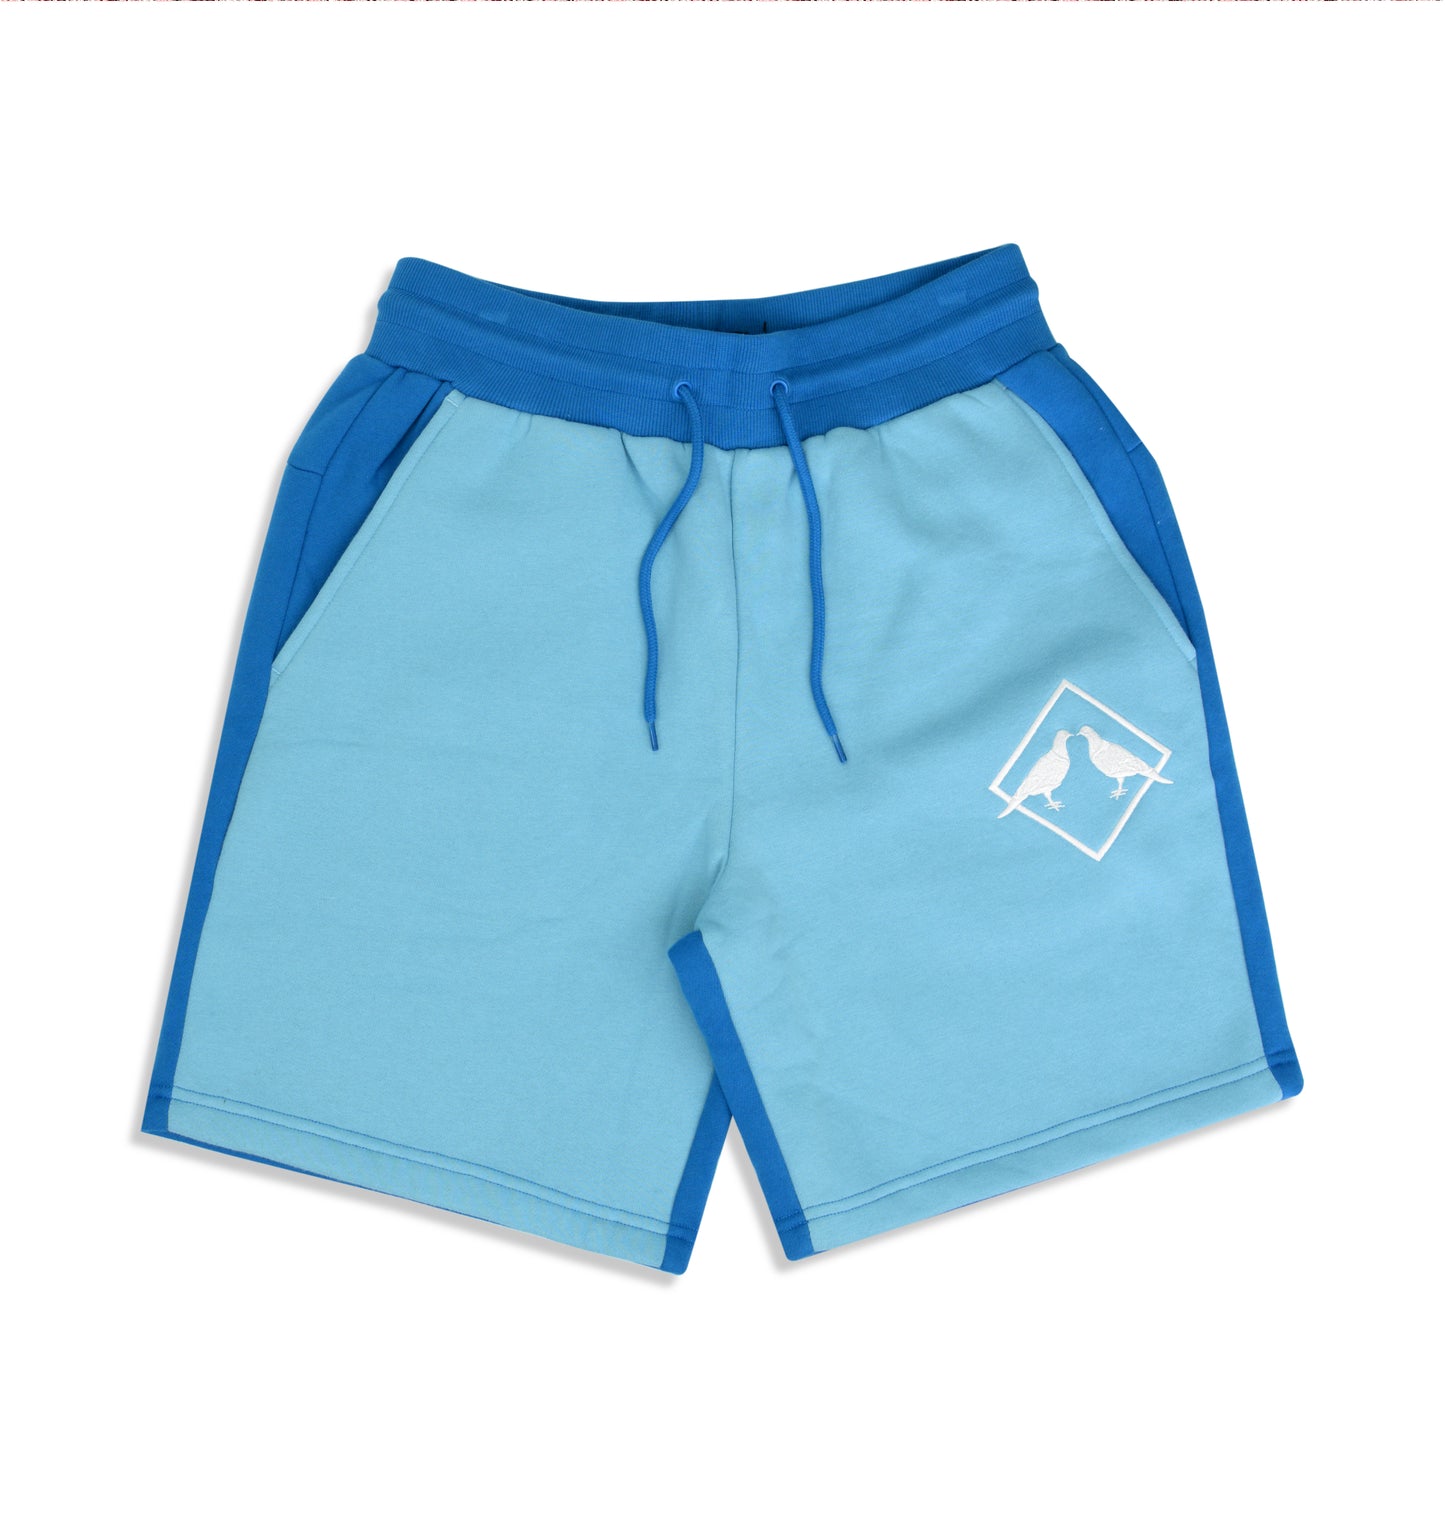 Park Shorts (Blue) - Bedstuyfly